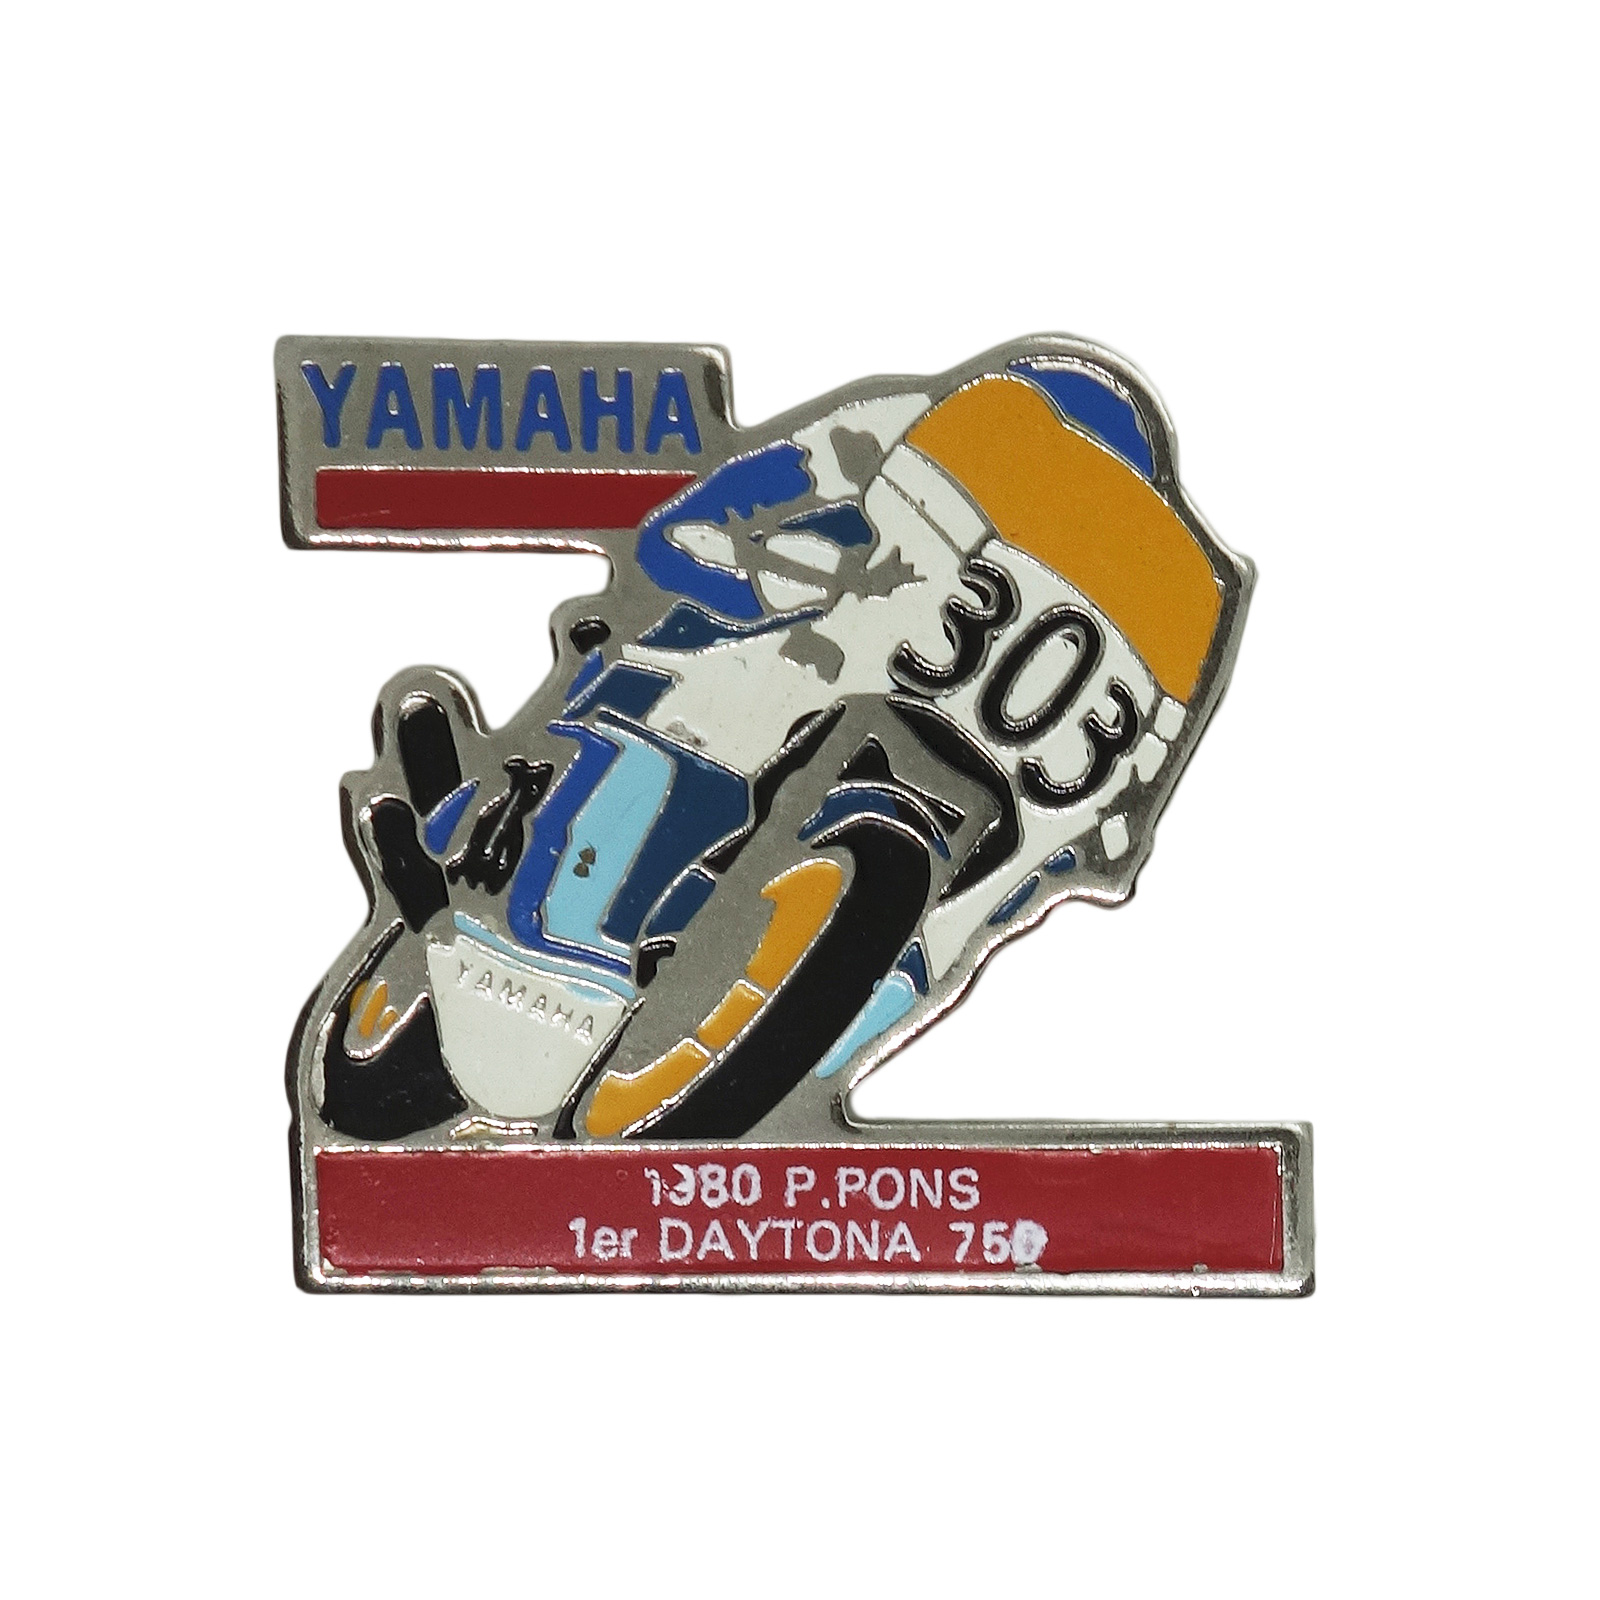 YAMAHA 1980 P.PONS ピンズ オートバイ ロードレース ライダー 留め具付き